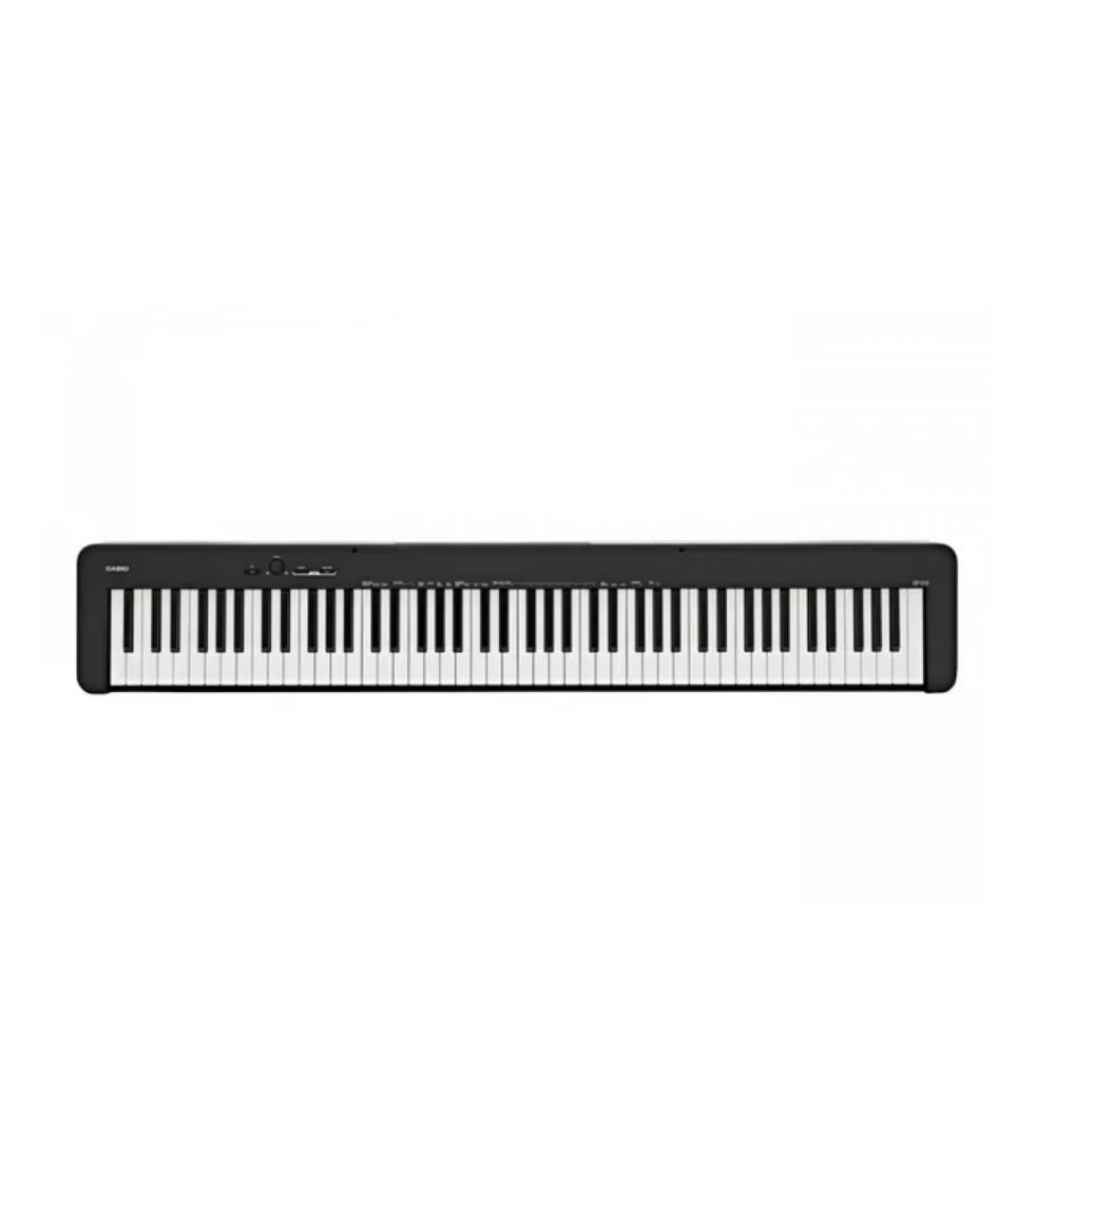 CDP-S110 Black PIANOFORTE DIGITALE 88 TASTI PESATI NERO